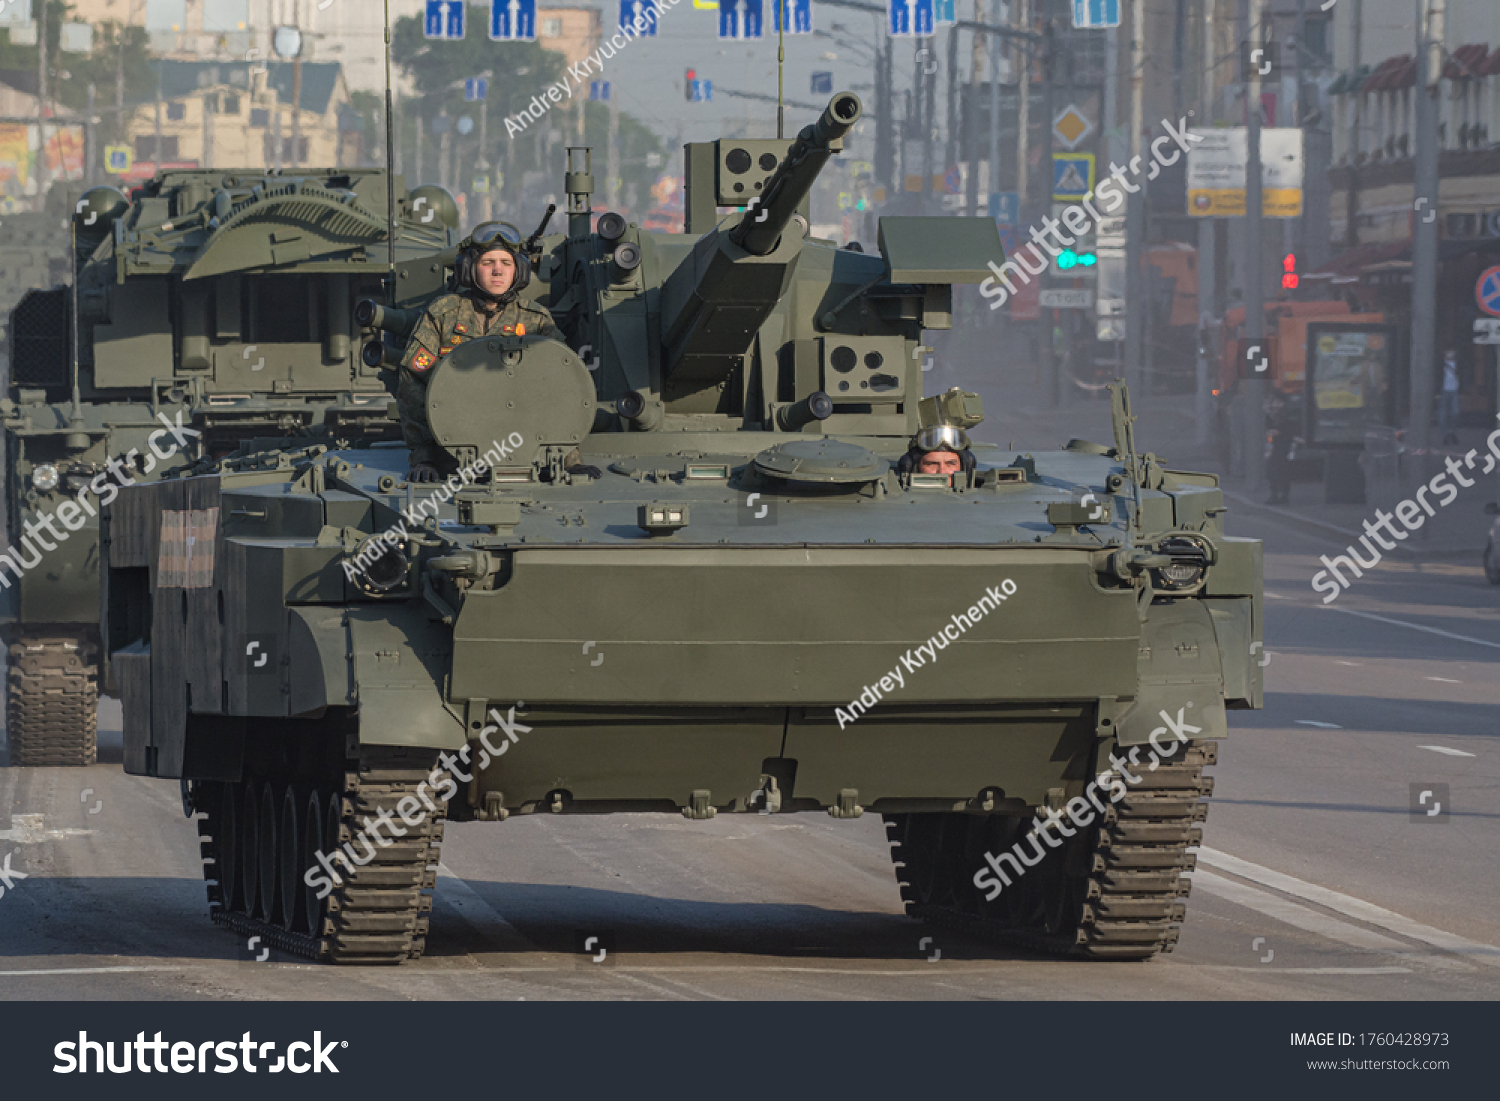 https://image.shutterstock.com/z/stock-photo-june-moscow-russia-the-s-zak-derivatsiya-pvo-self-propelled-air-defense-vehicle-1760428973.jpg